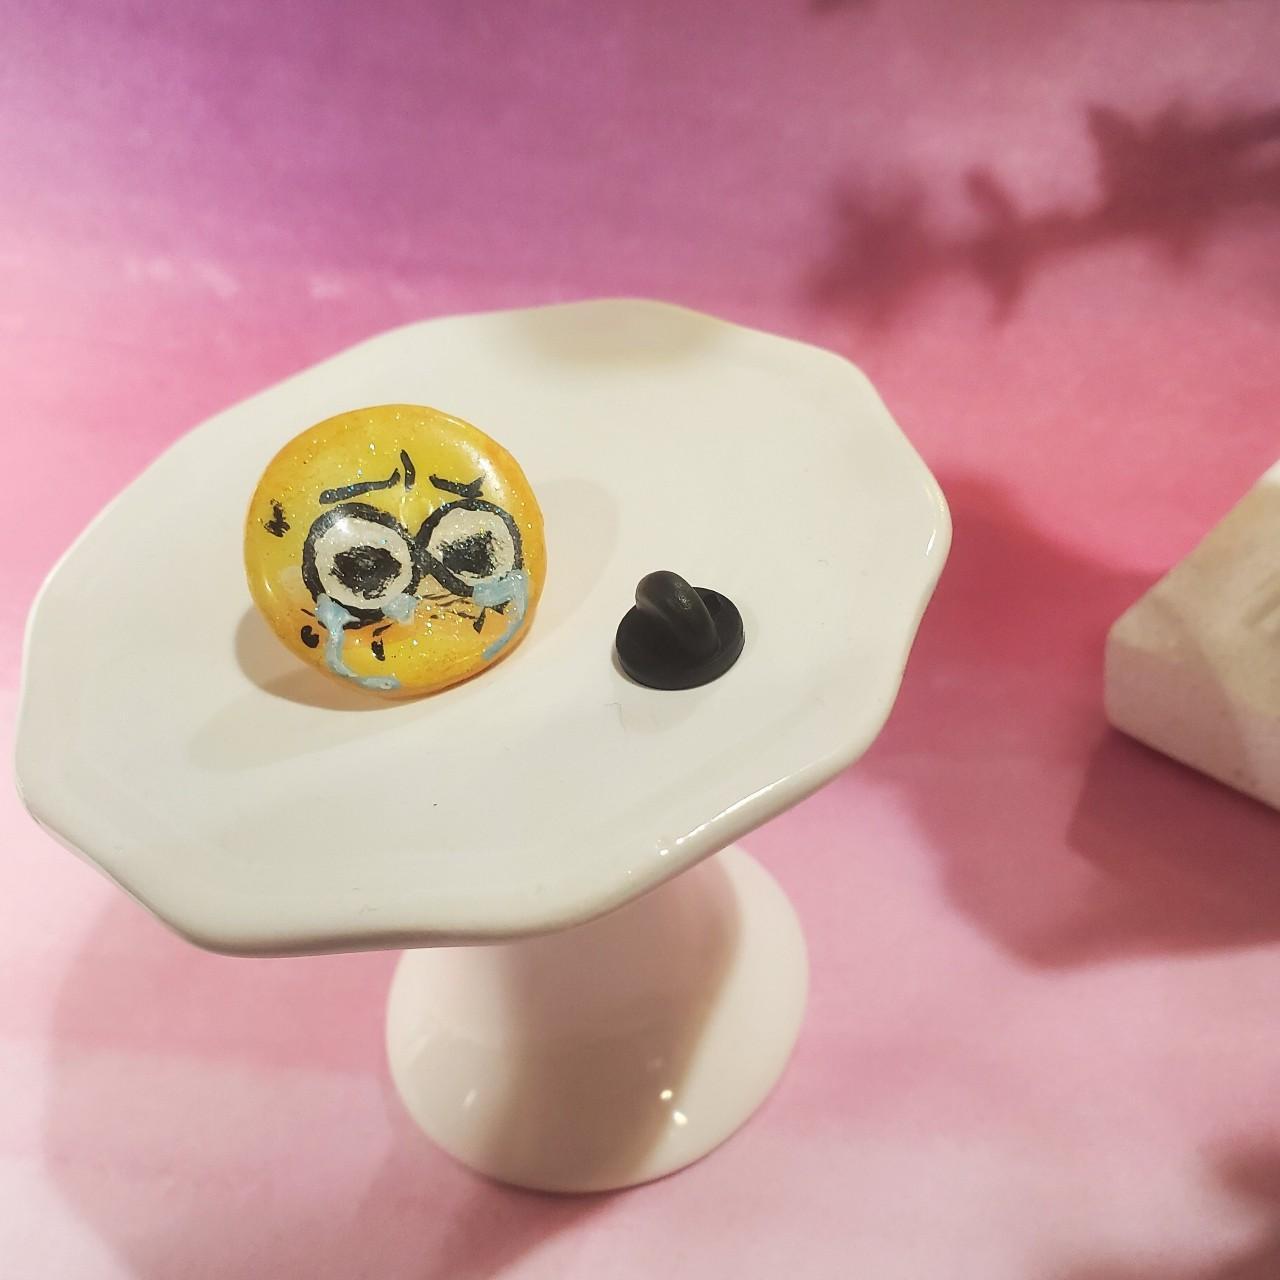 Handmade Crying Cursed Emoji Clay Pin This pin is - Depop